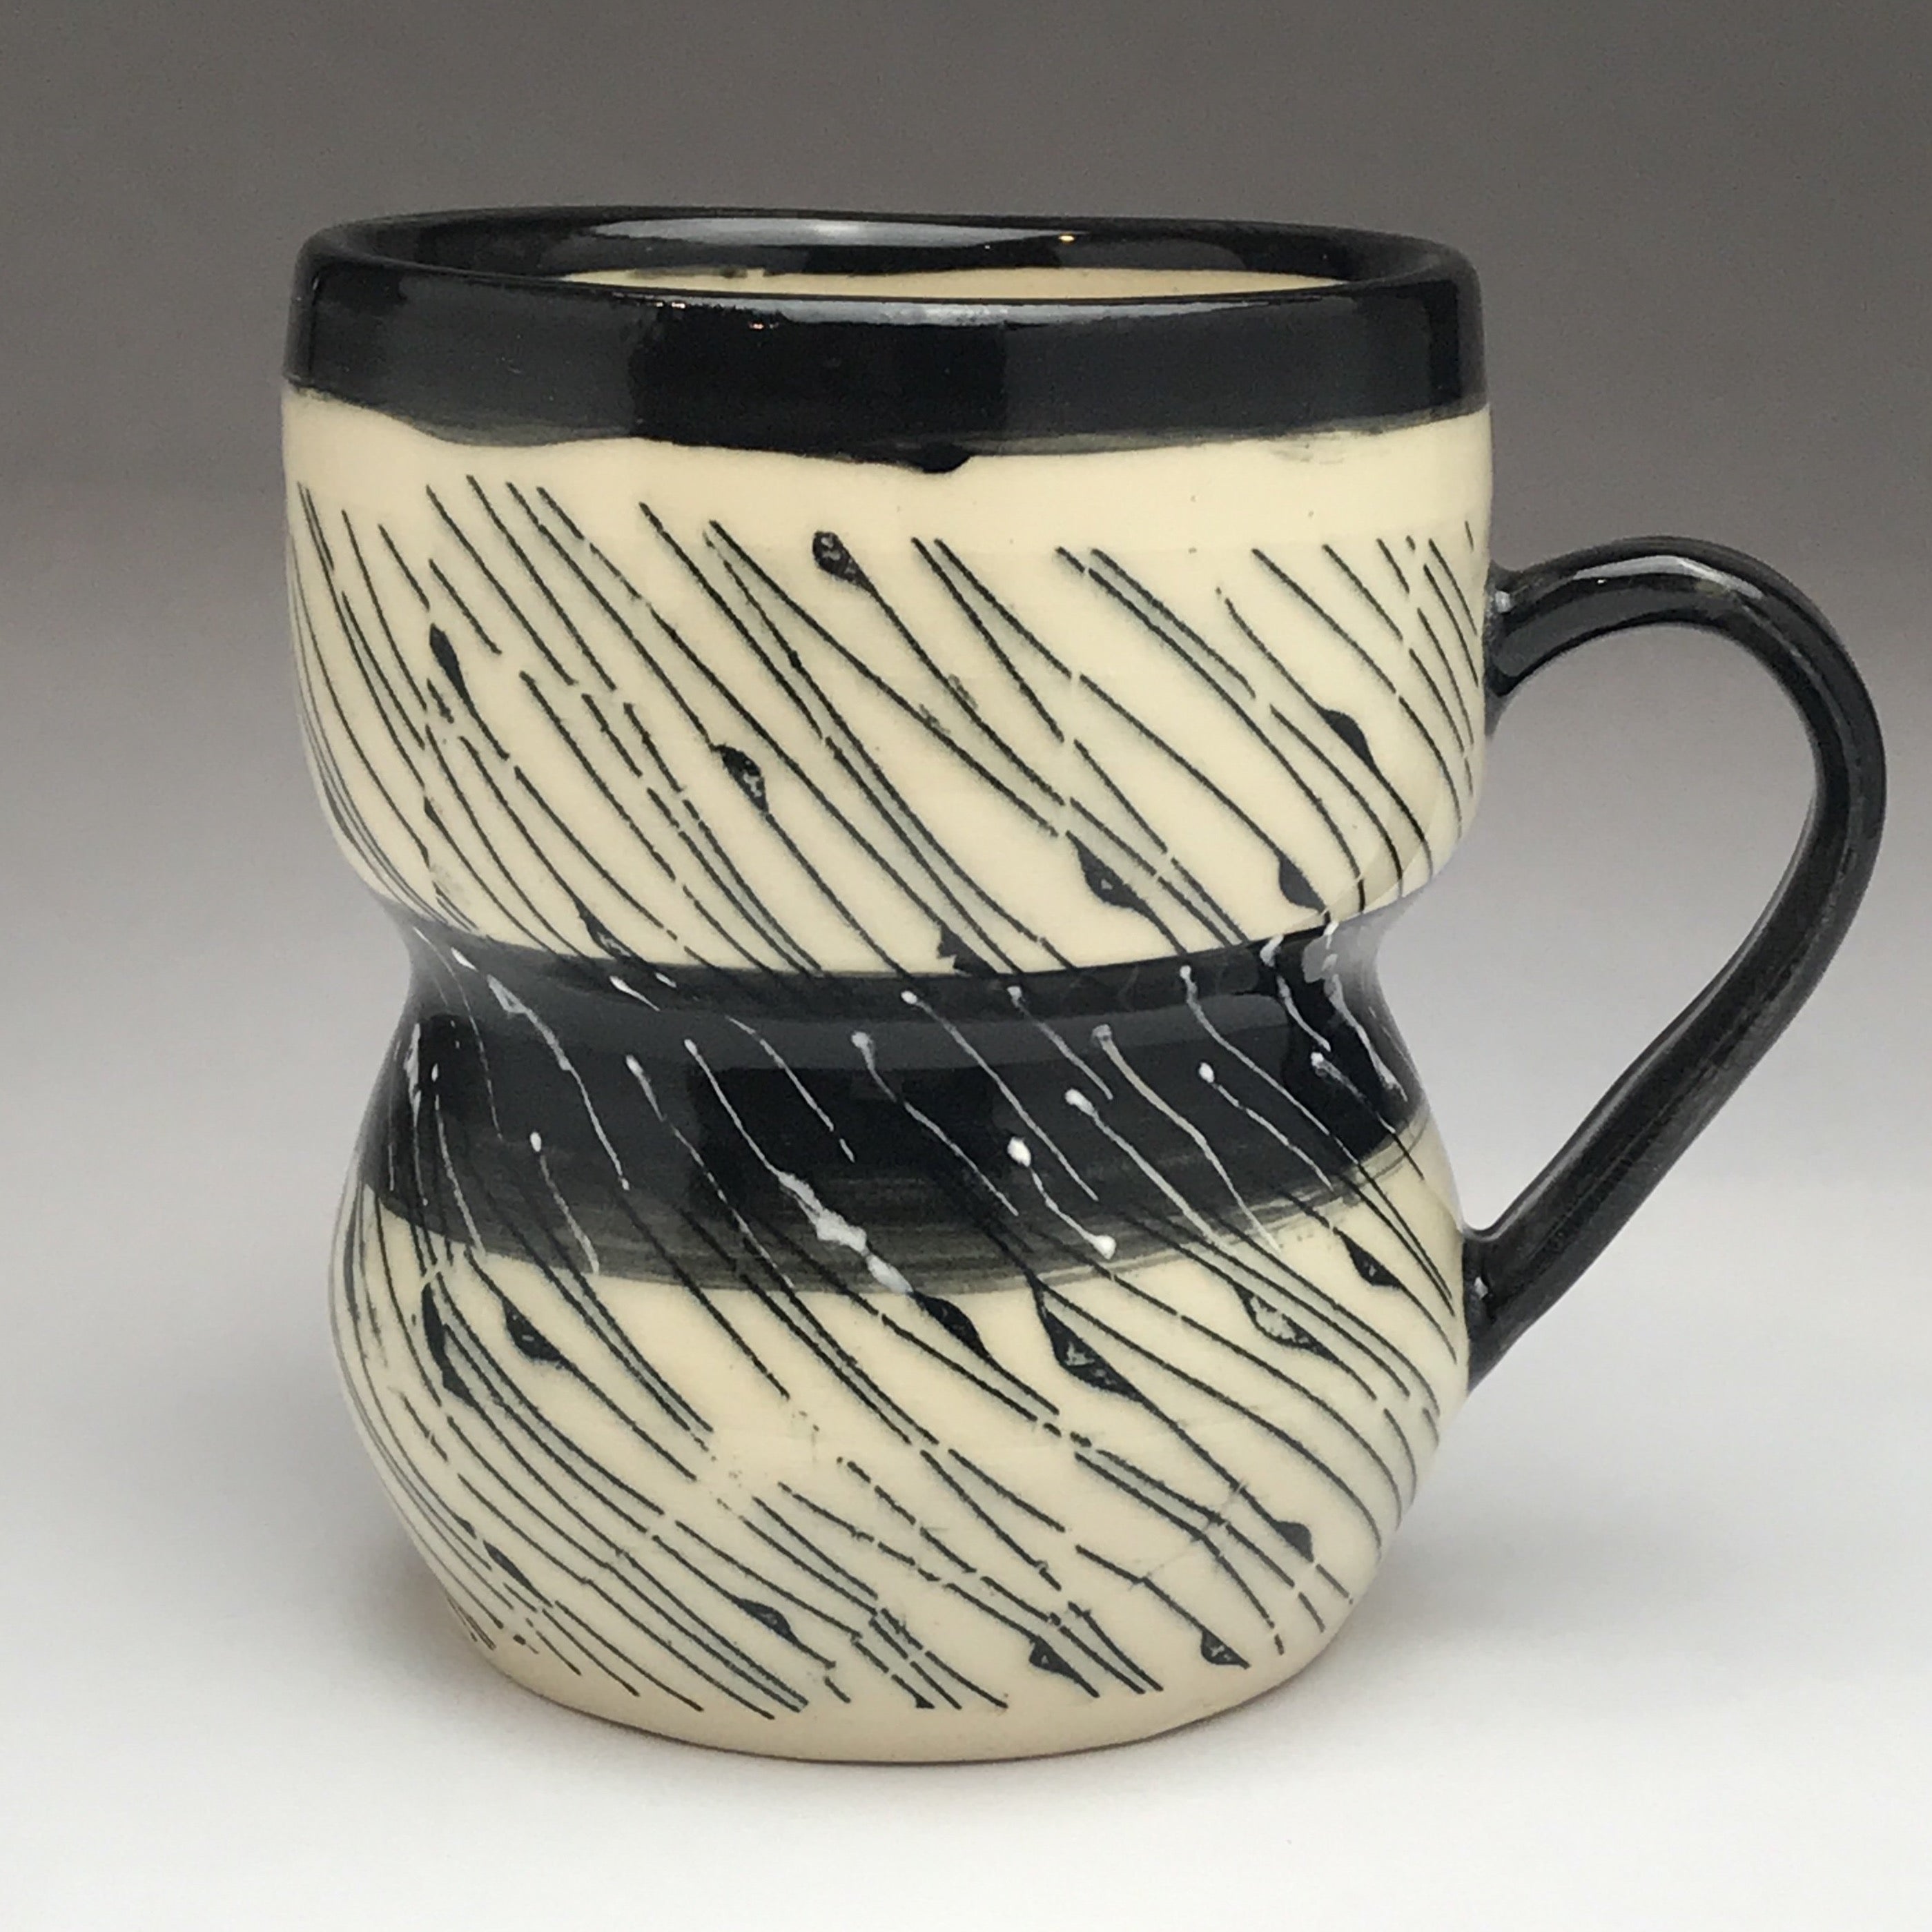 White coffee or tea mug with black and white diagonal line design.